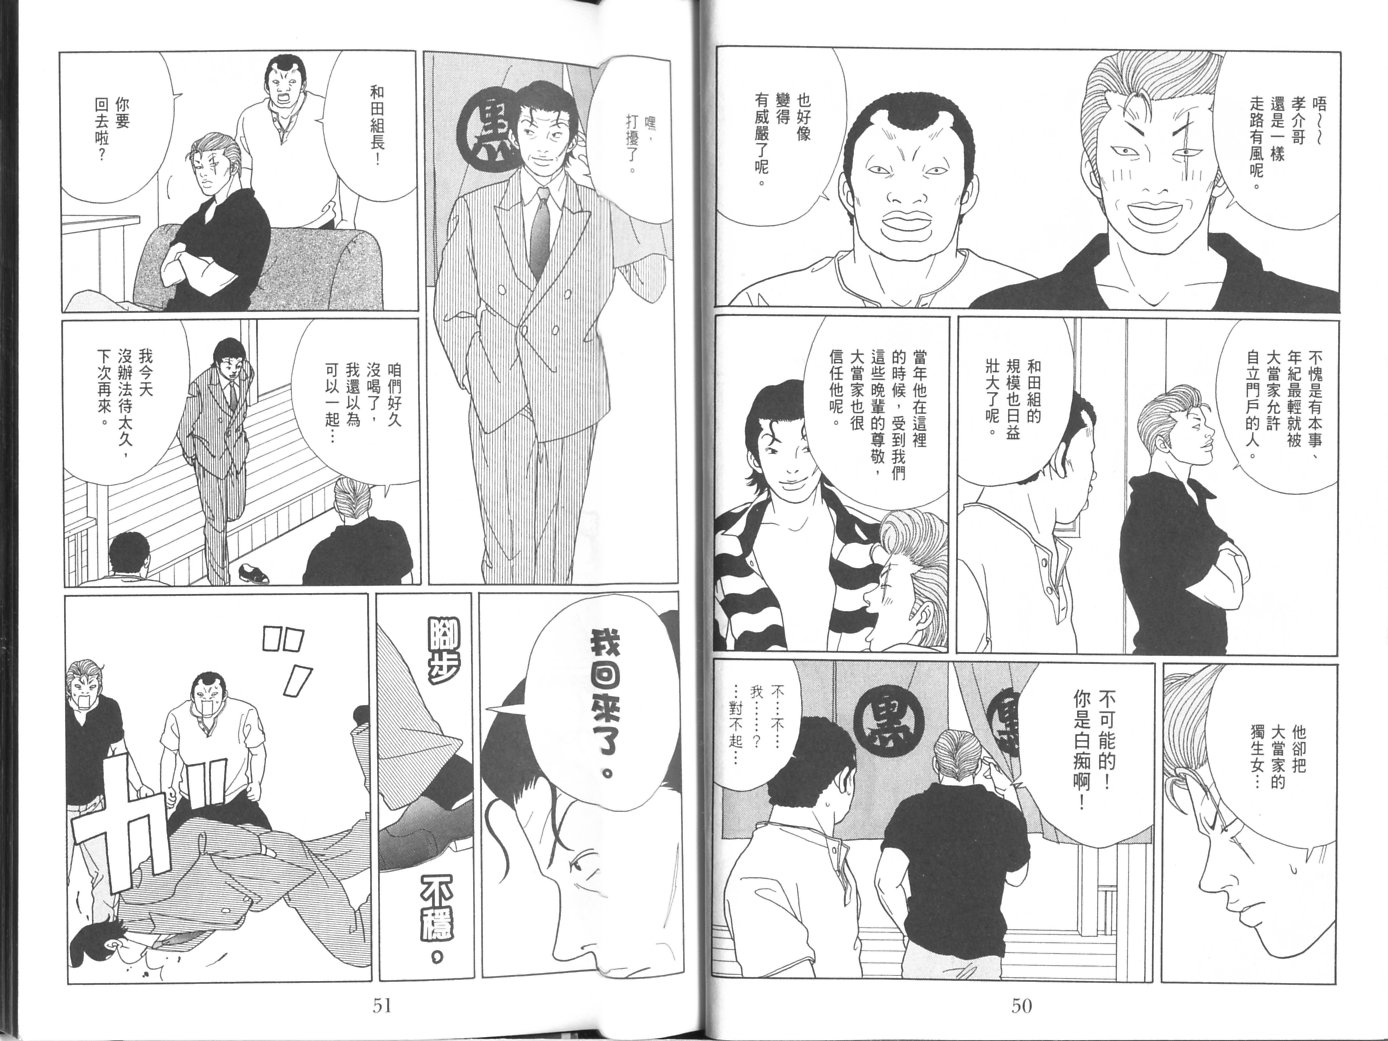 billwang_comic_4261235-Gokusen_08_031-embed.jpg